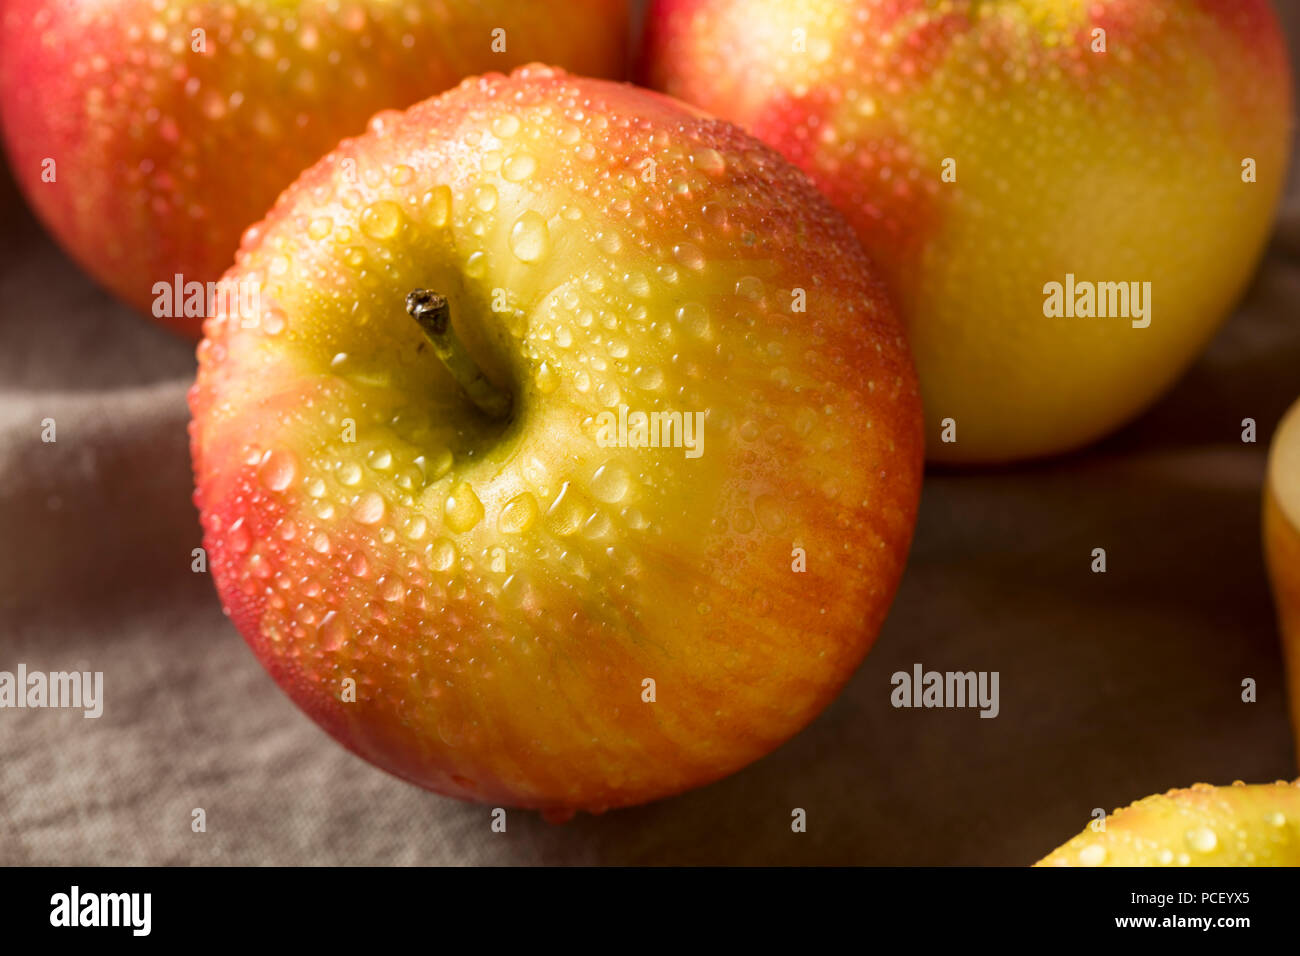 Raw Red Organic Honeycrisp Apples Ready to Eat Stock Photo - Alamy